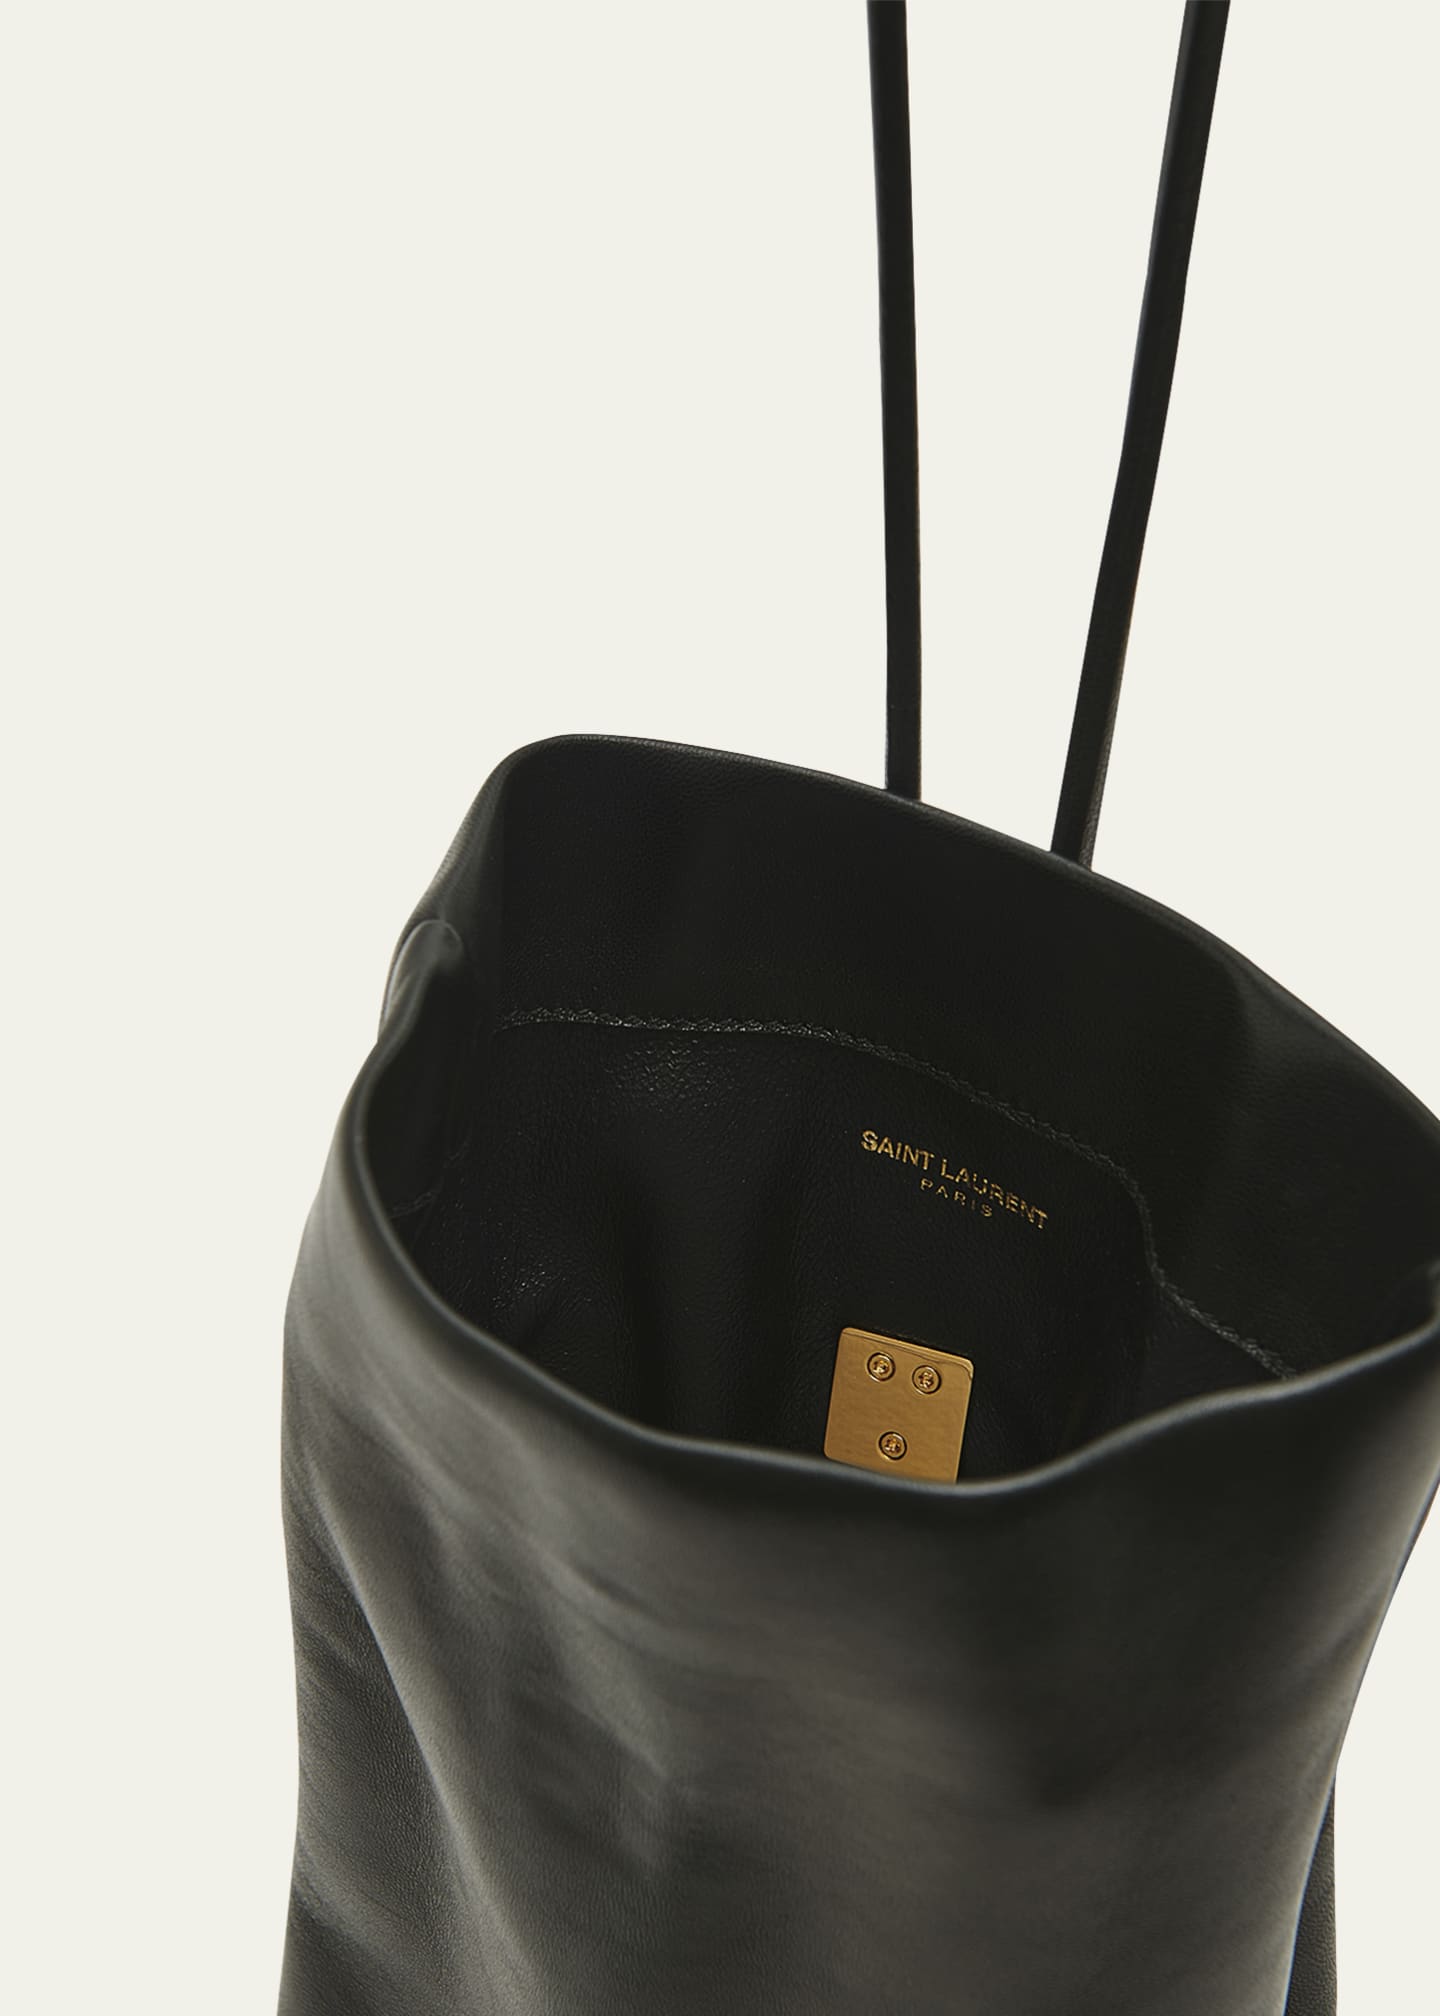 Saint Laurent Ysl New Pouch Monogram Clutch Bag In Black